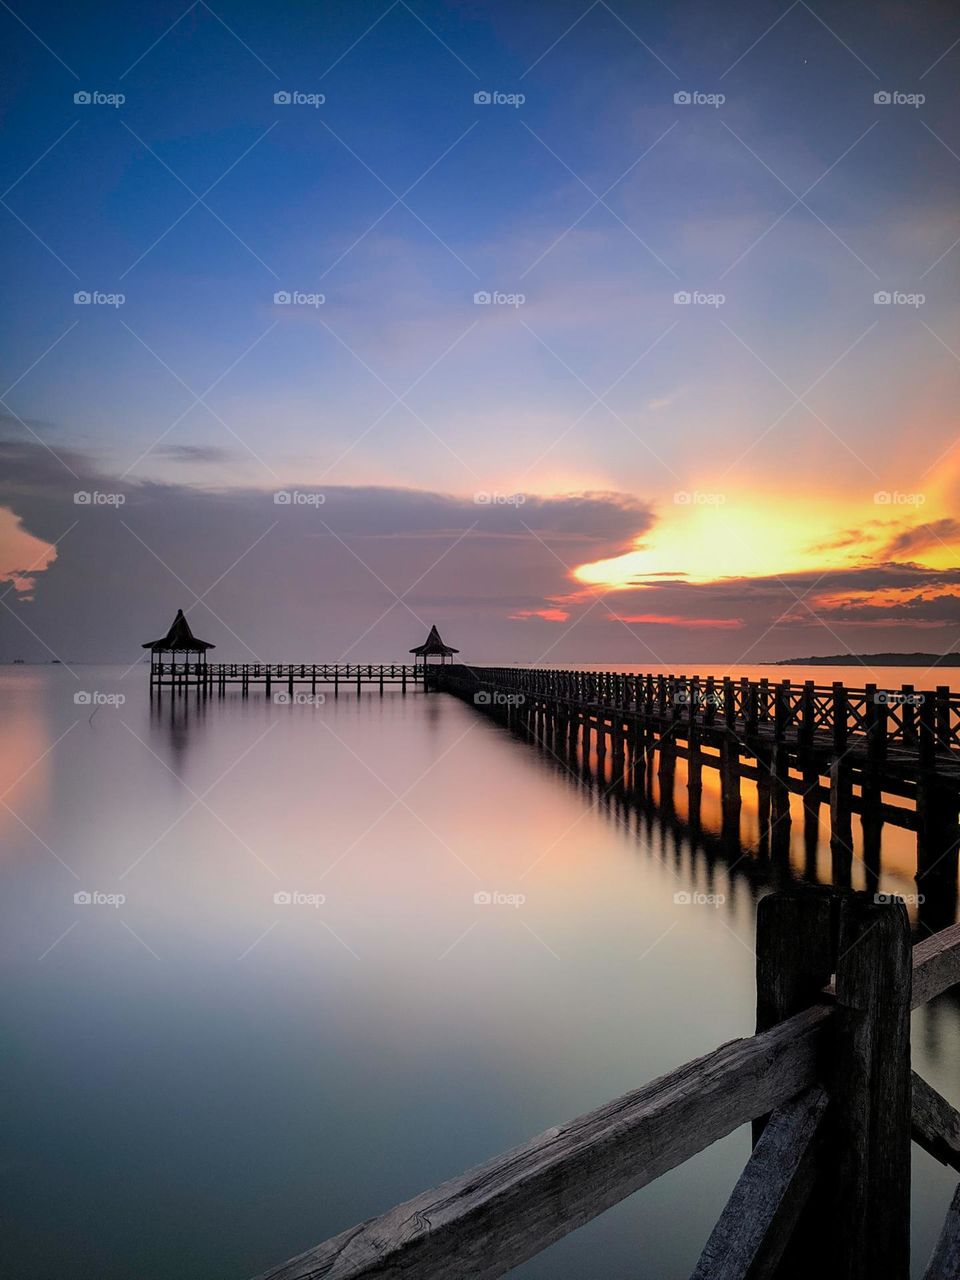 bridge and sunrise by the sea